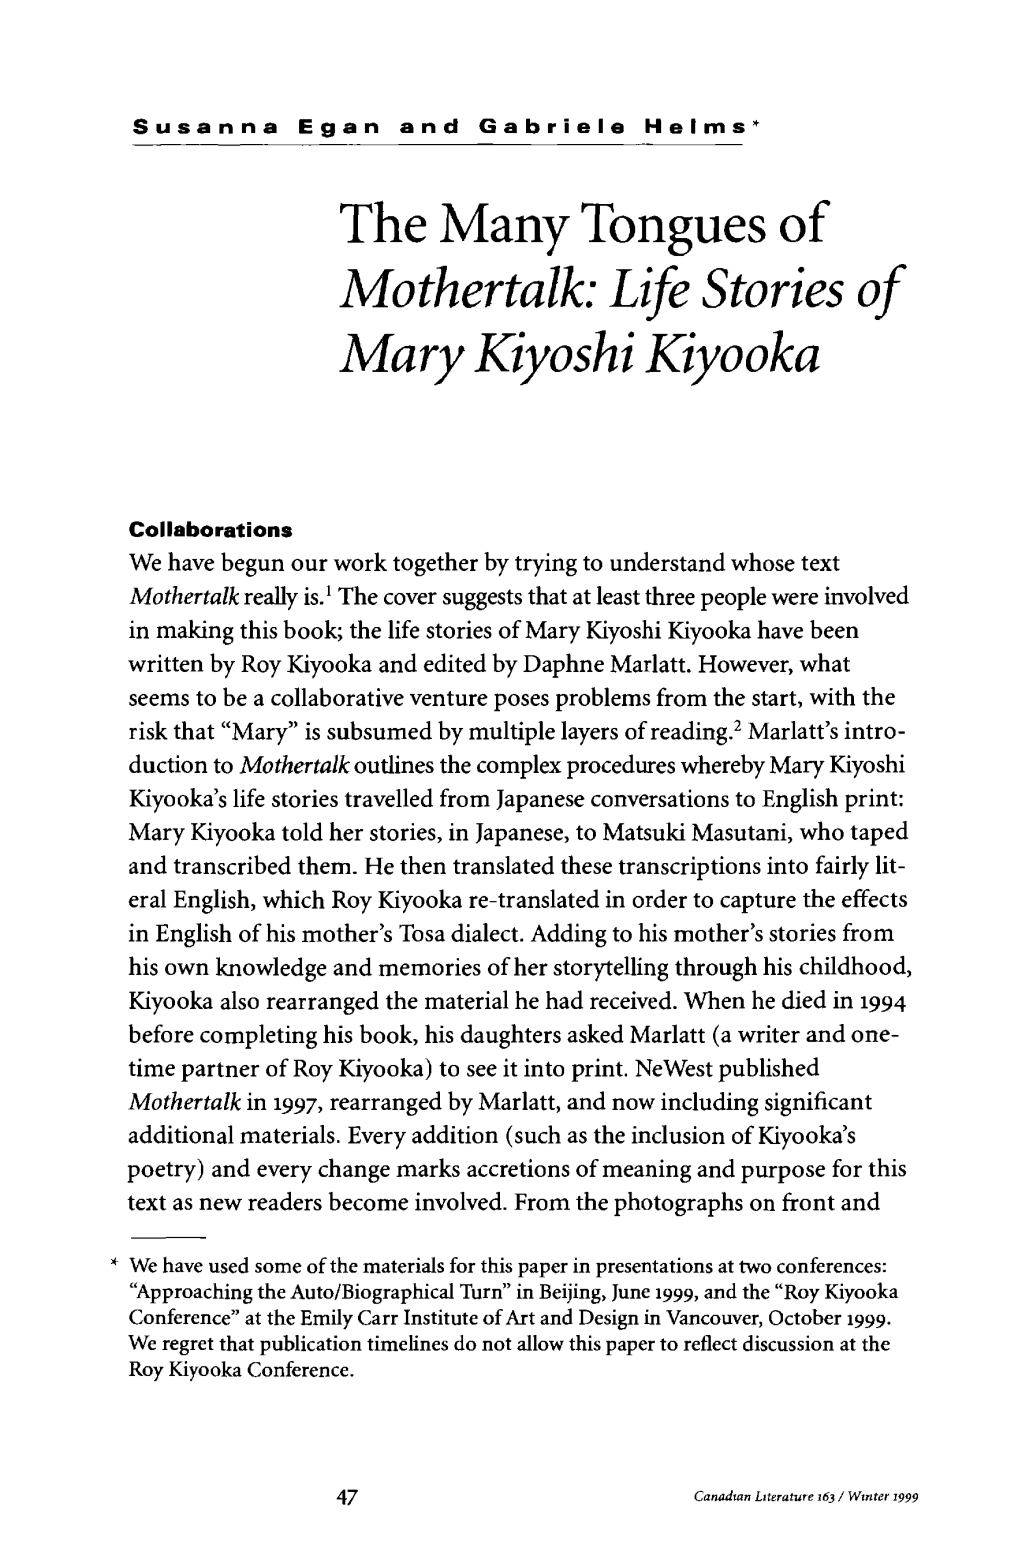 The Many Tongues of Mothertalk: Life Stories of Mary Kiyoshi Kiyooka